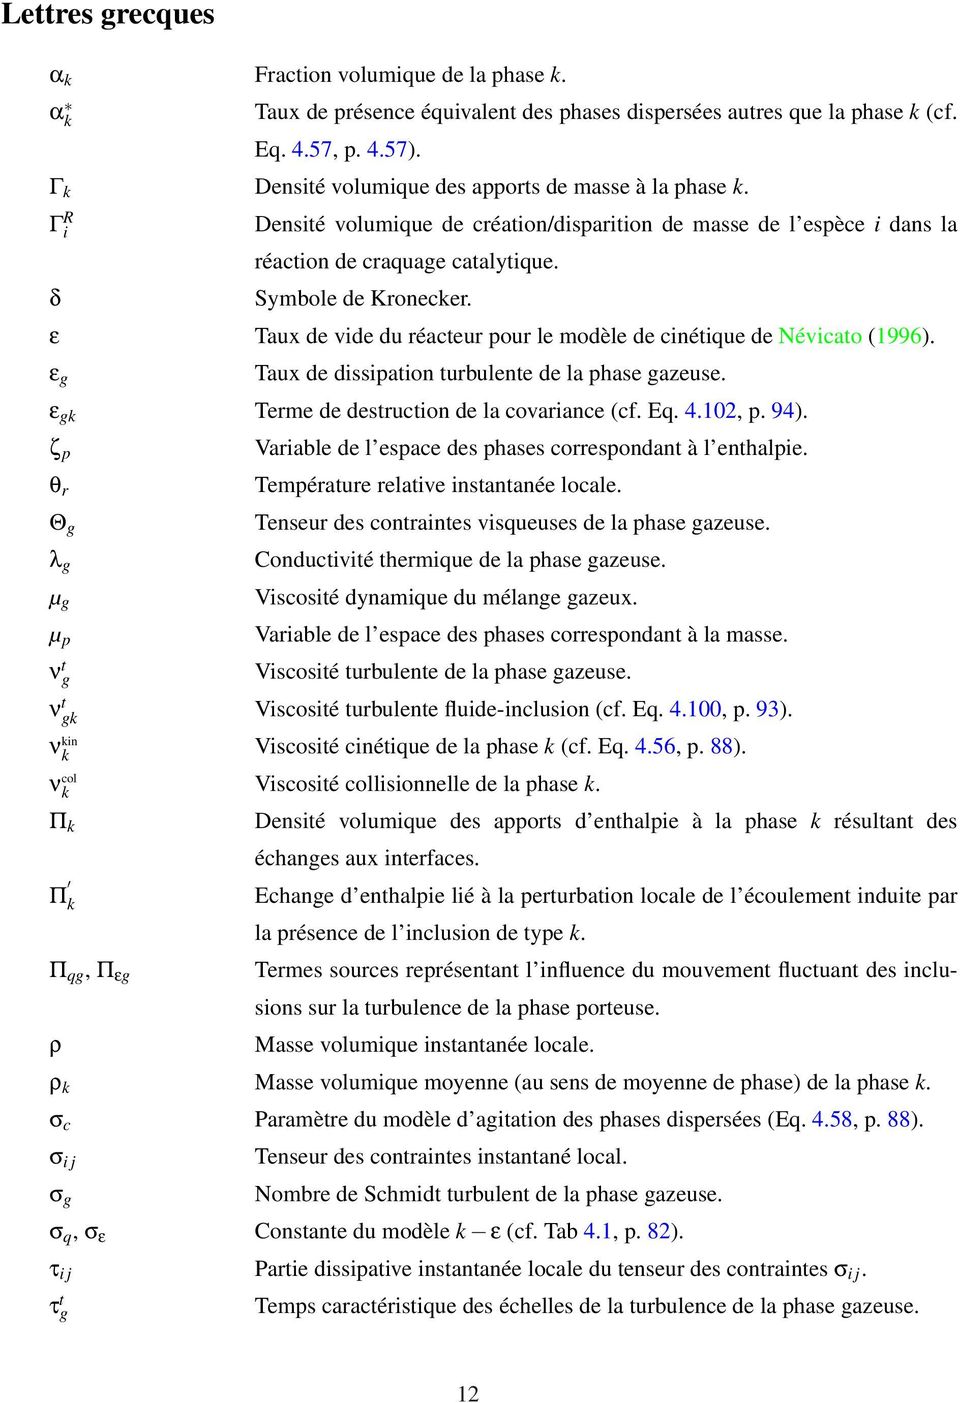 ε Taux de vide du réacteur pour le modèle de cinétique de Névicato (1996). ε g Taux de dissipation turbulente de la phase gazeuse. ε gk Terme de destruction de la covariance (cf. Eq. 4.102, p. 94).